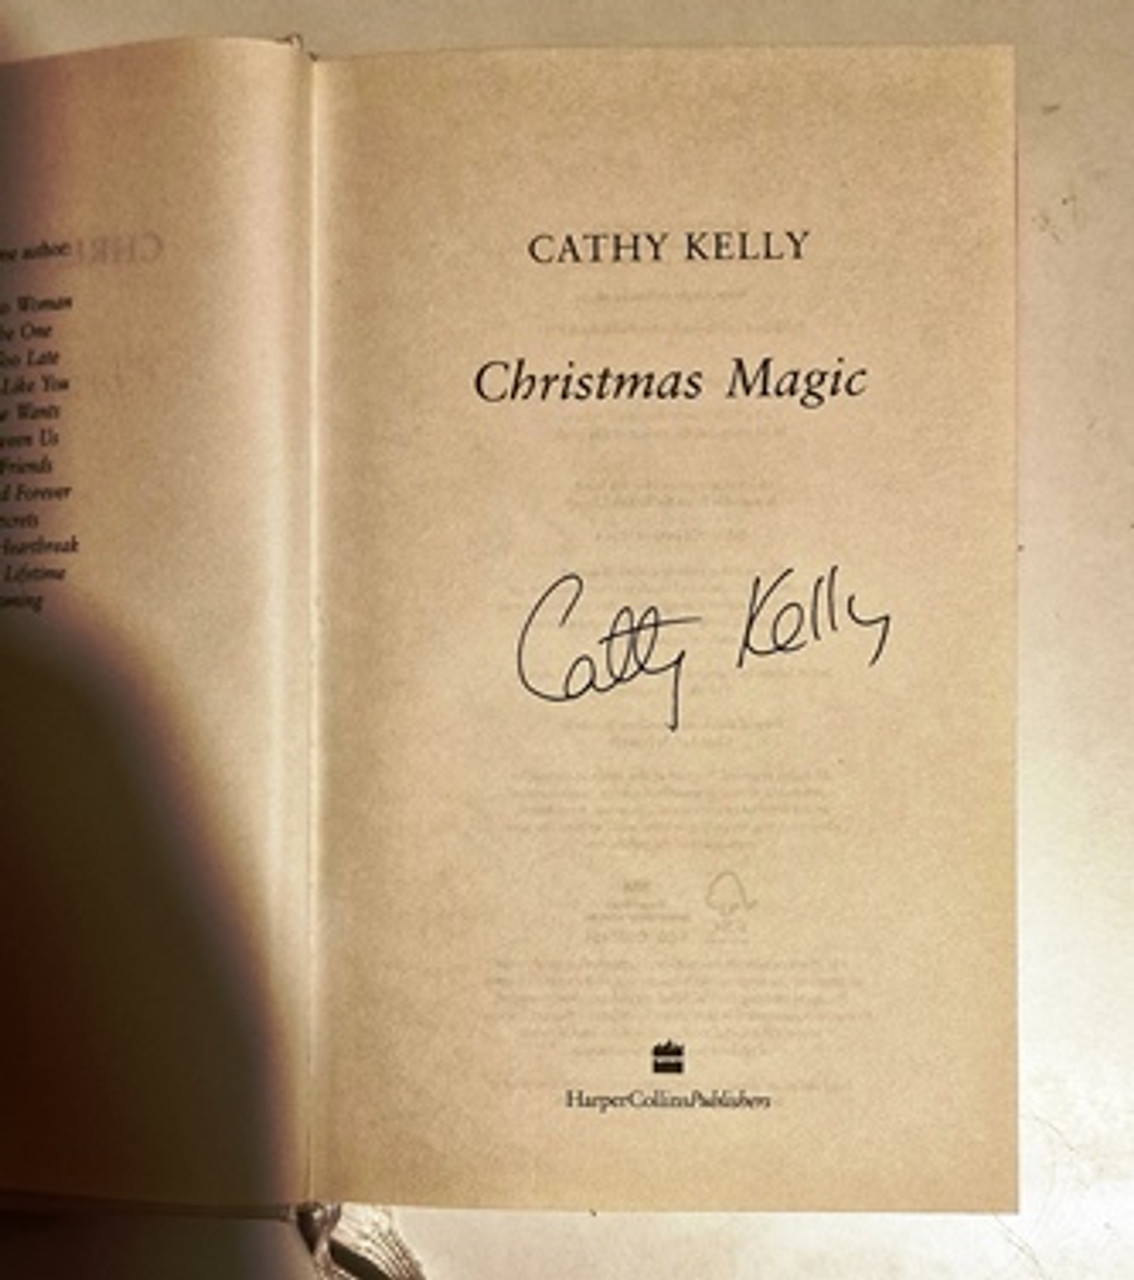 Cathy Kelly / Christmas Magic (Signed by the Author) (Hardback).